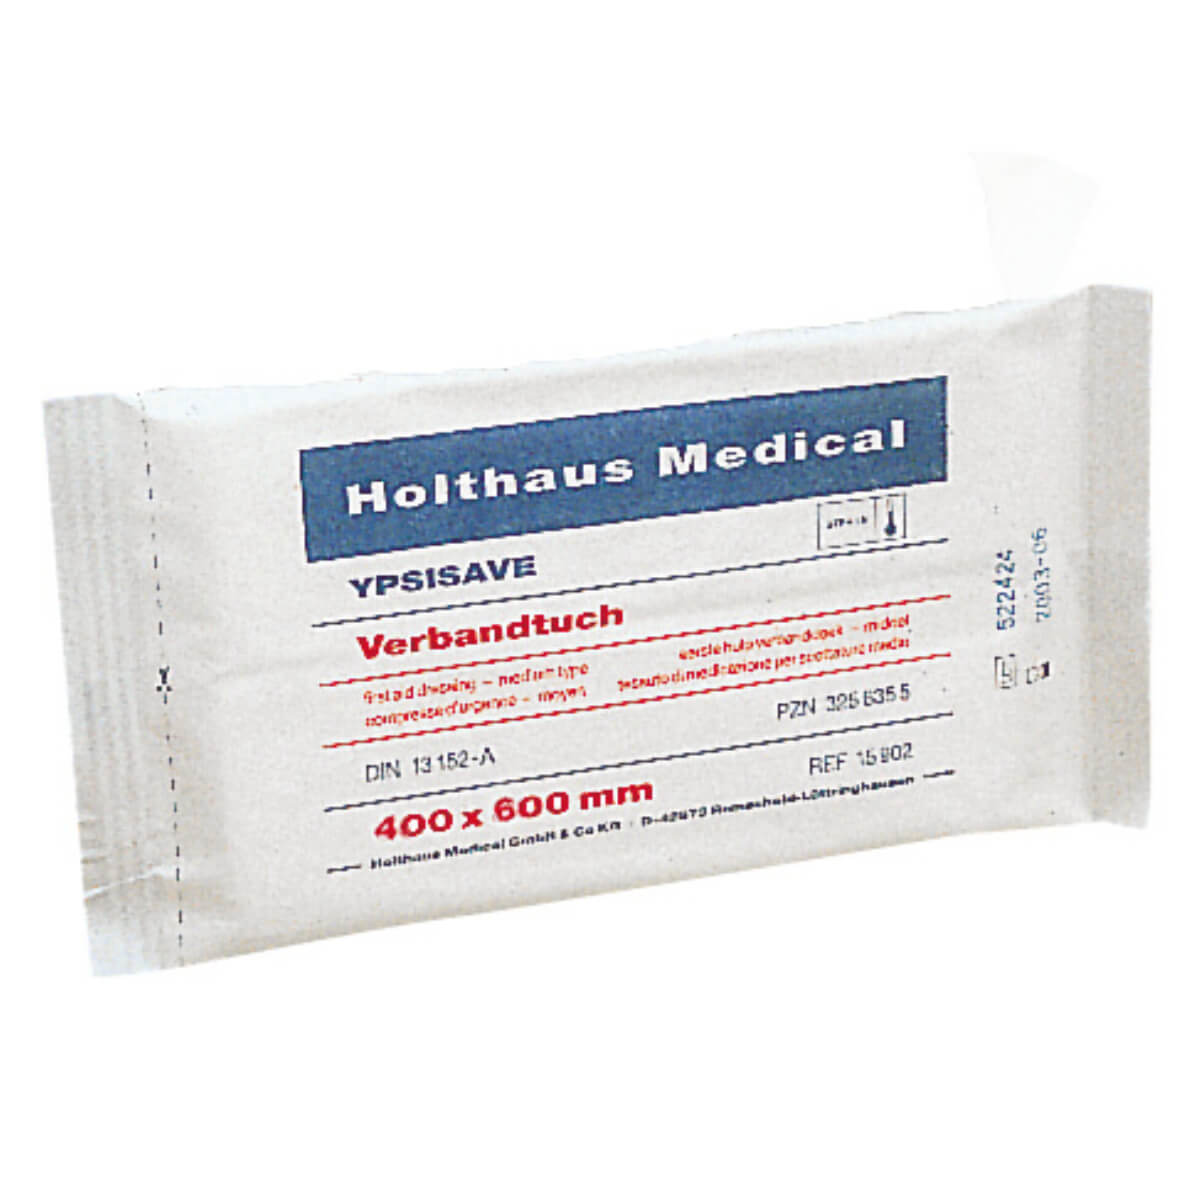 Holthaus Medical Ypsisave Verbandtuch